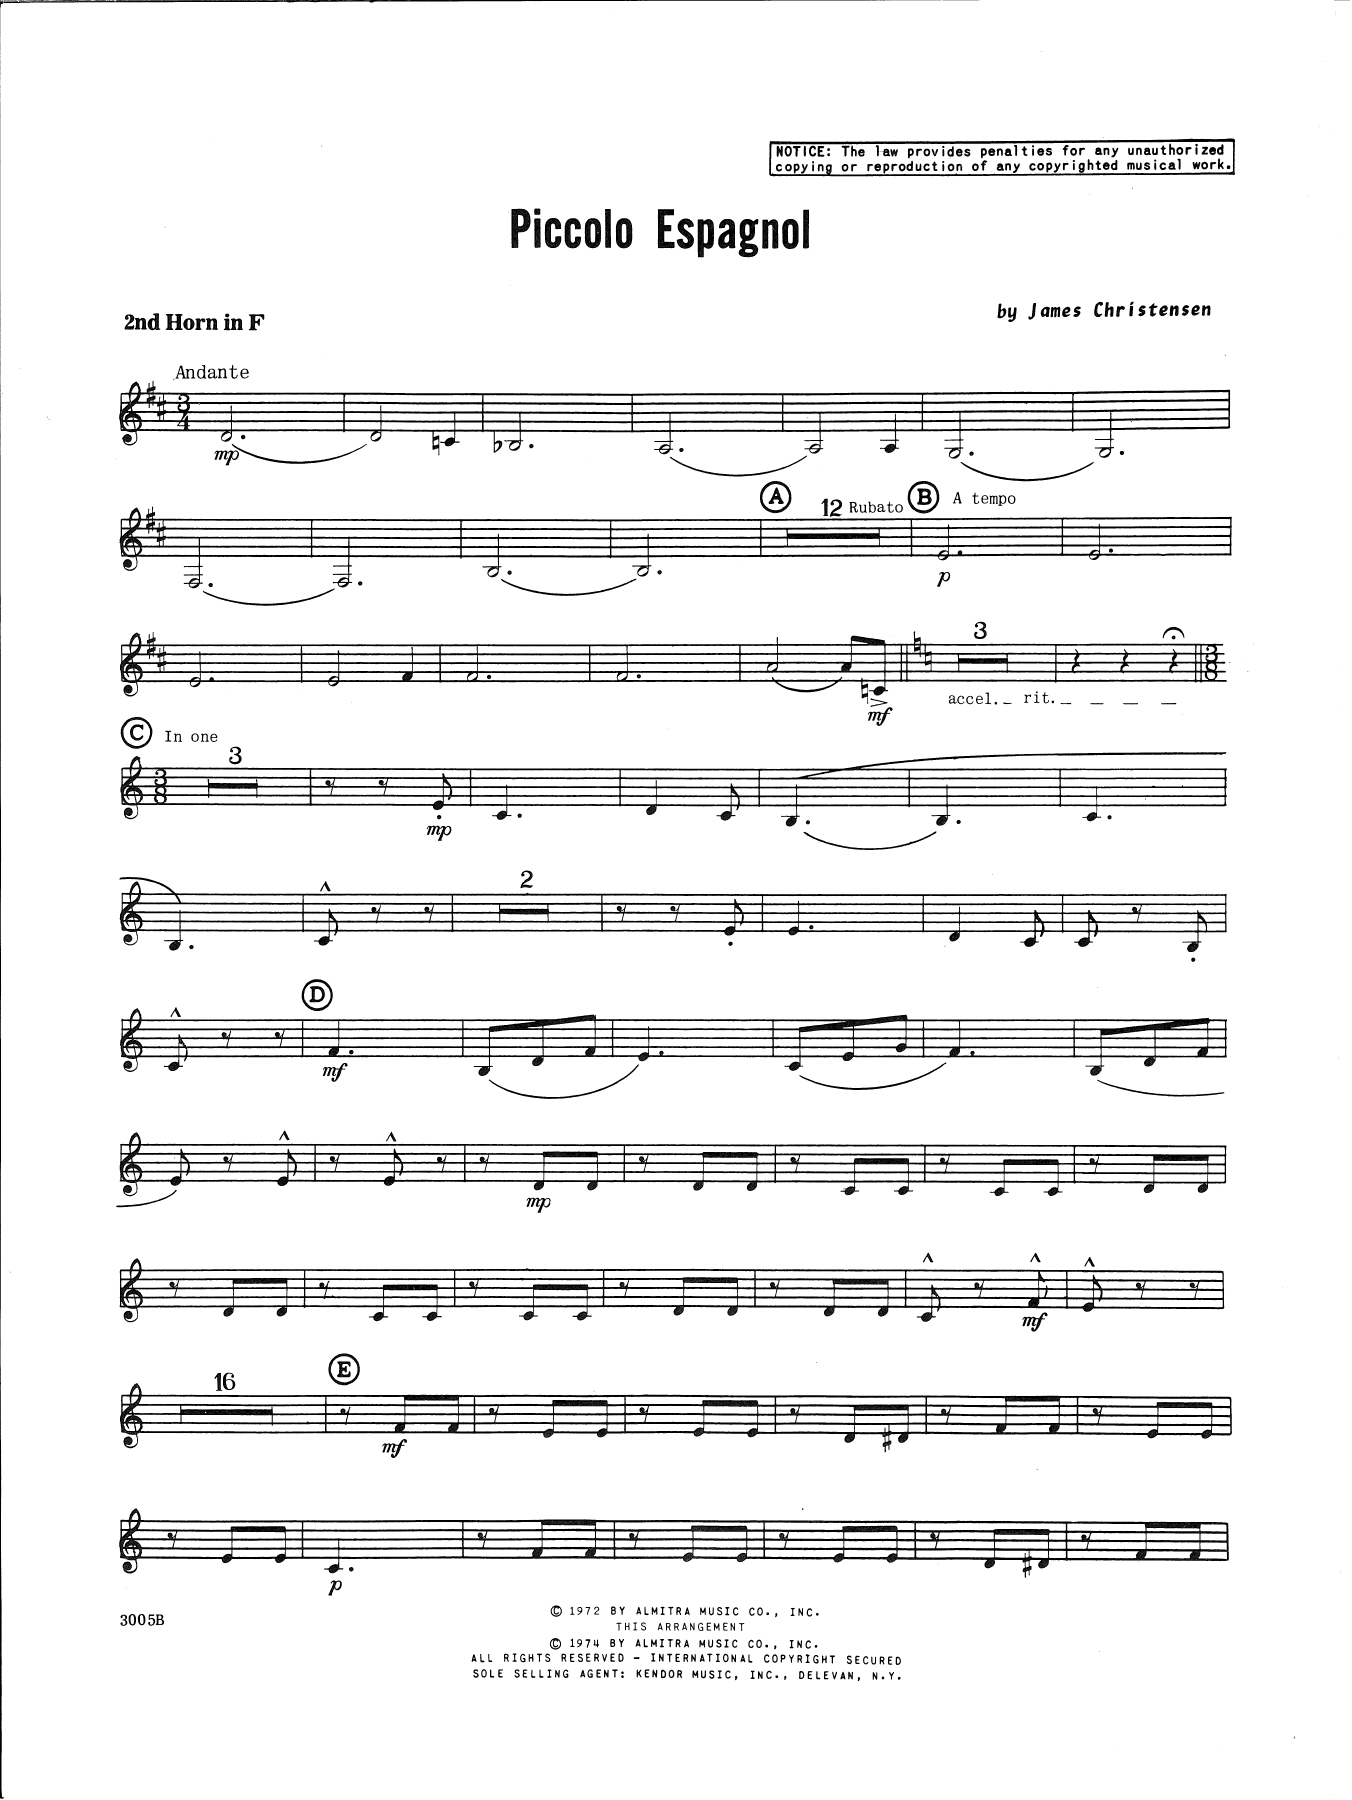 Download James Christensen Piccolo Espagnol - 2nd Horn in F Sheet Music